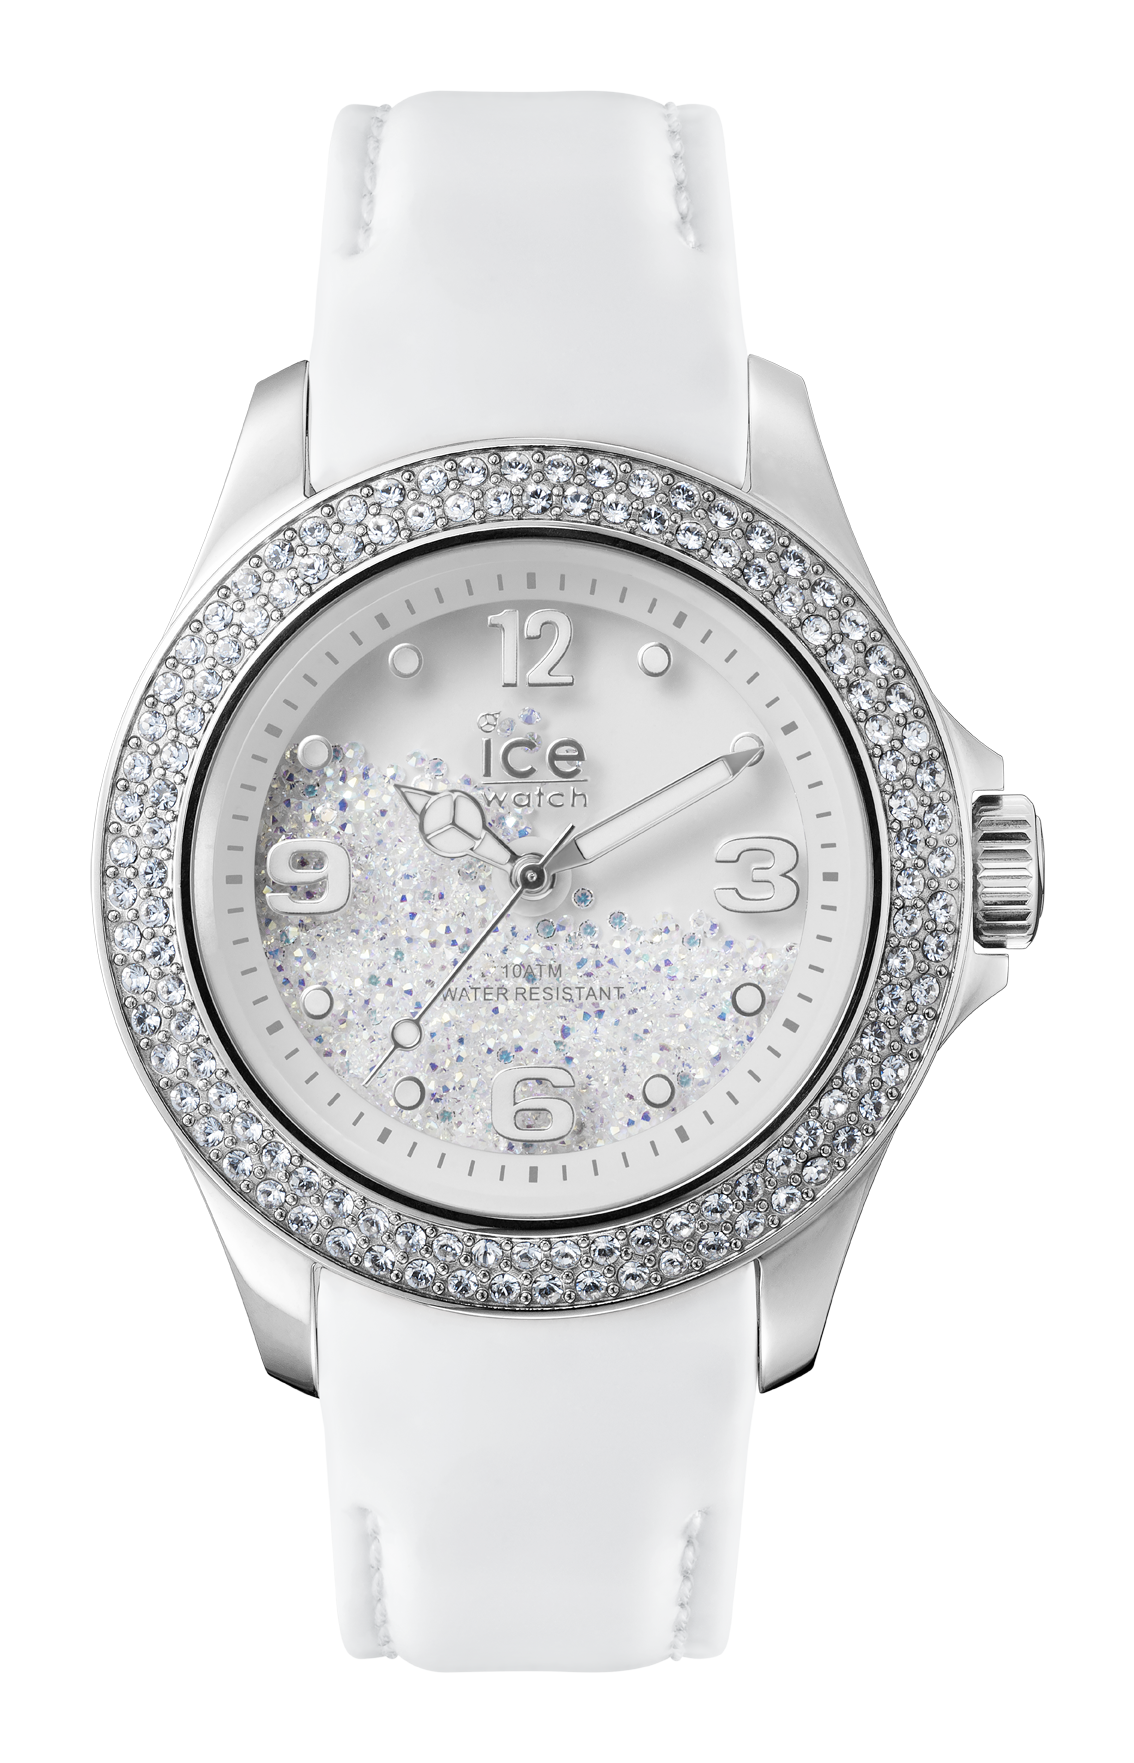 ICE Crystal_White Silver_E 249,00